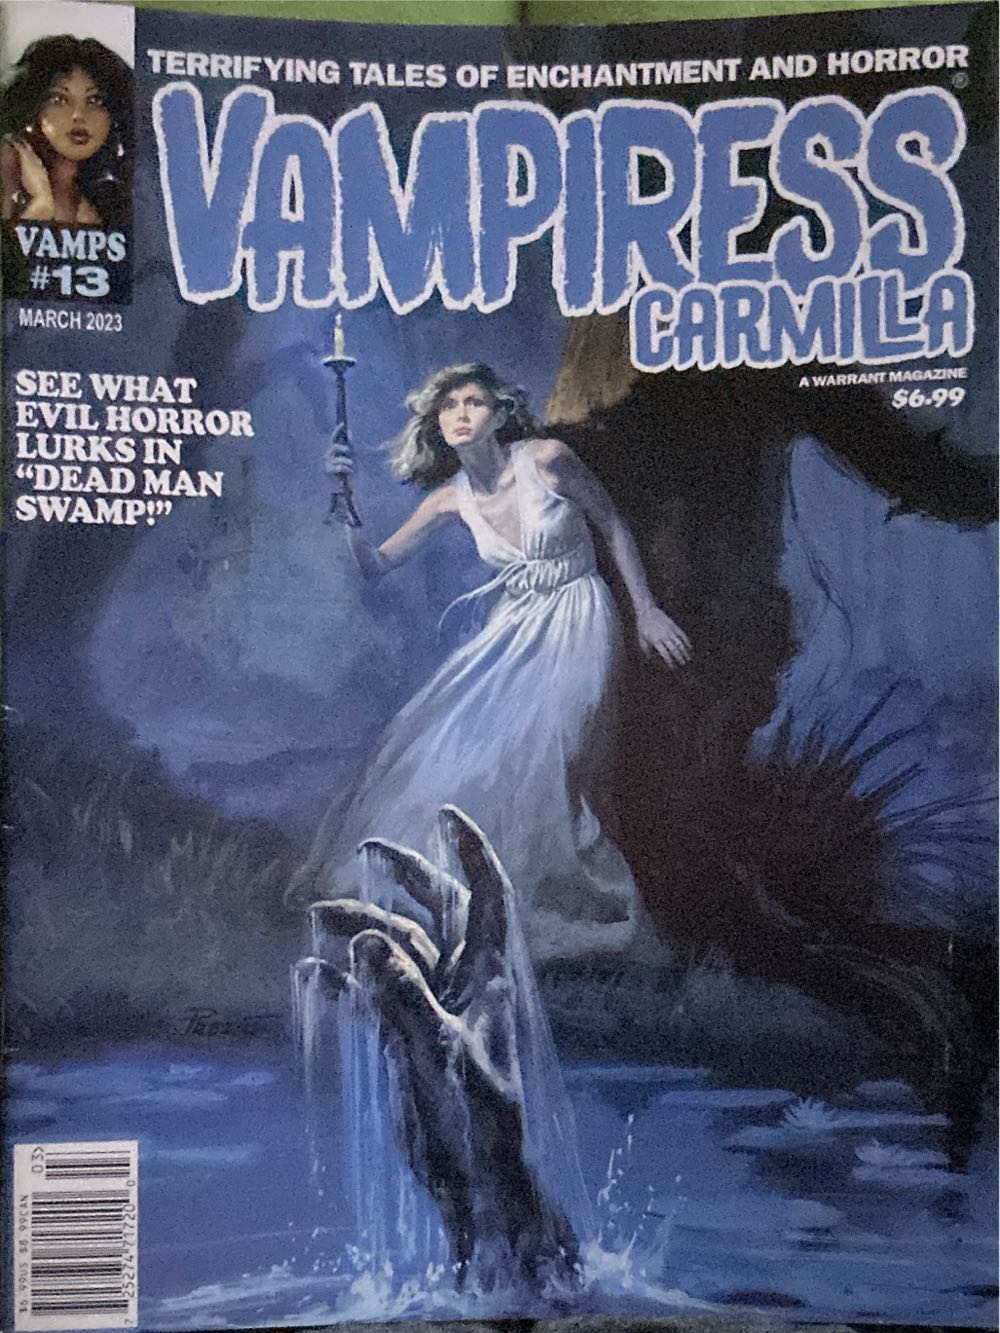 Vampiress Carmilla  (January) magazine collectible [Barcode 72527471720003] - Main Image 1